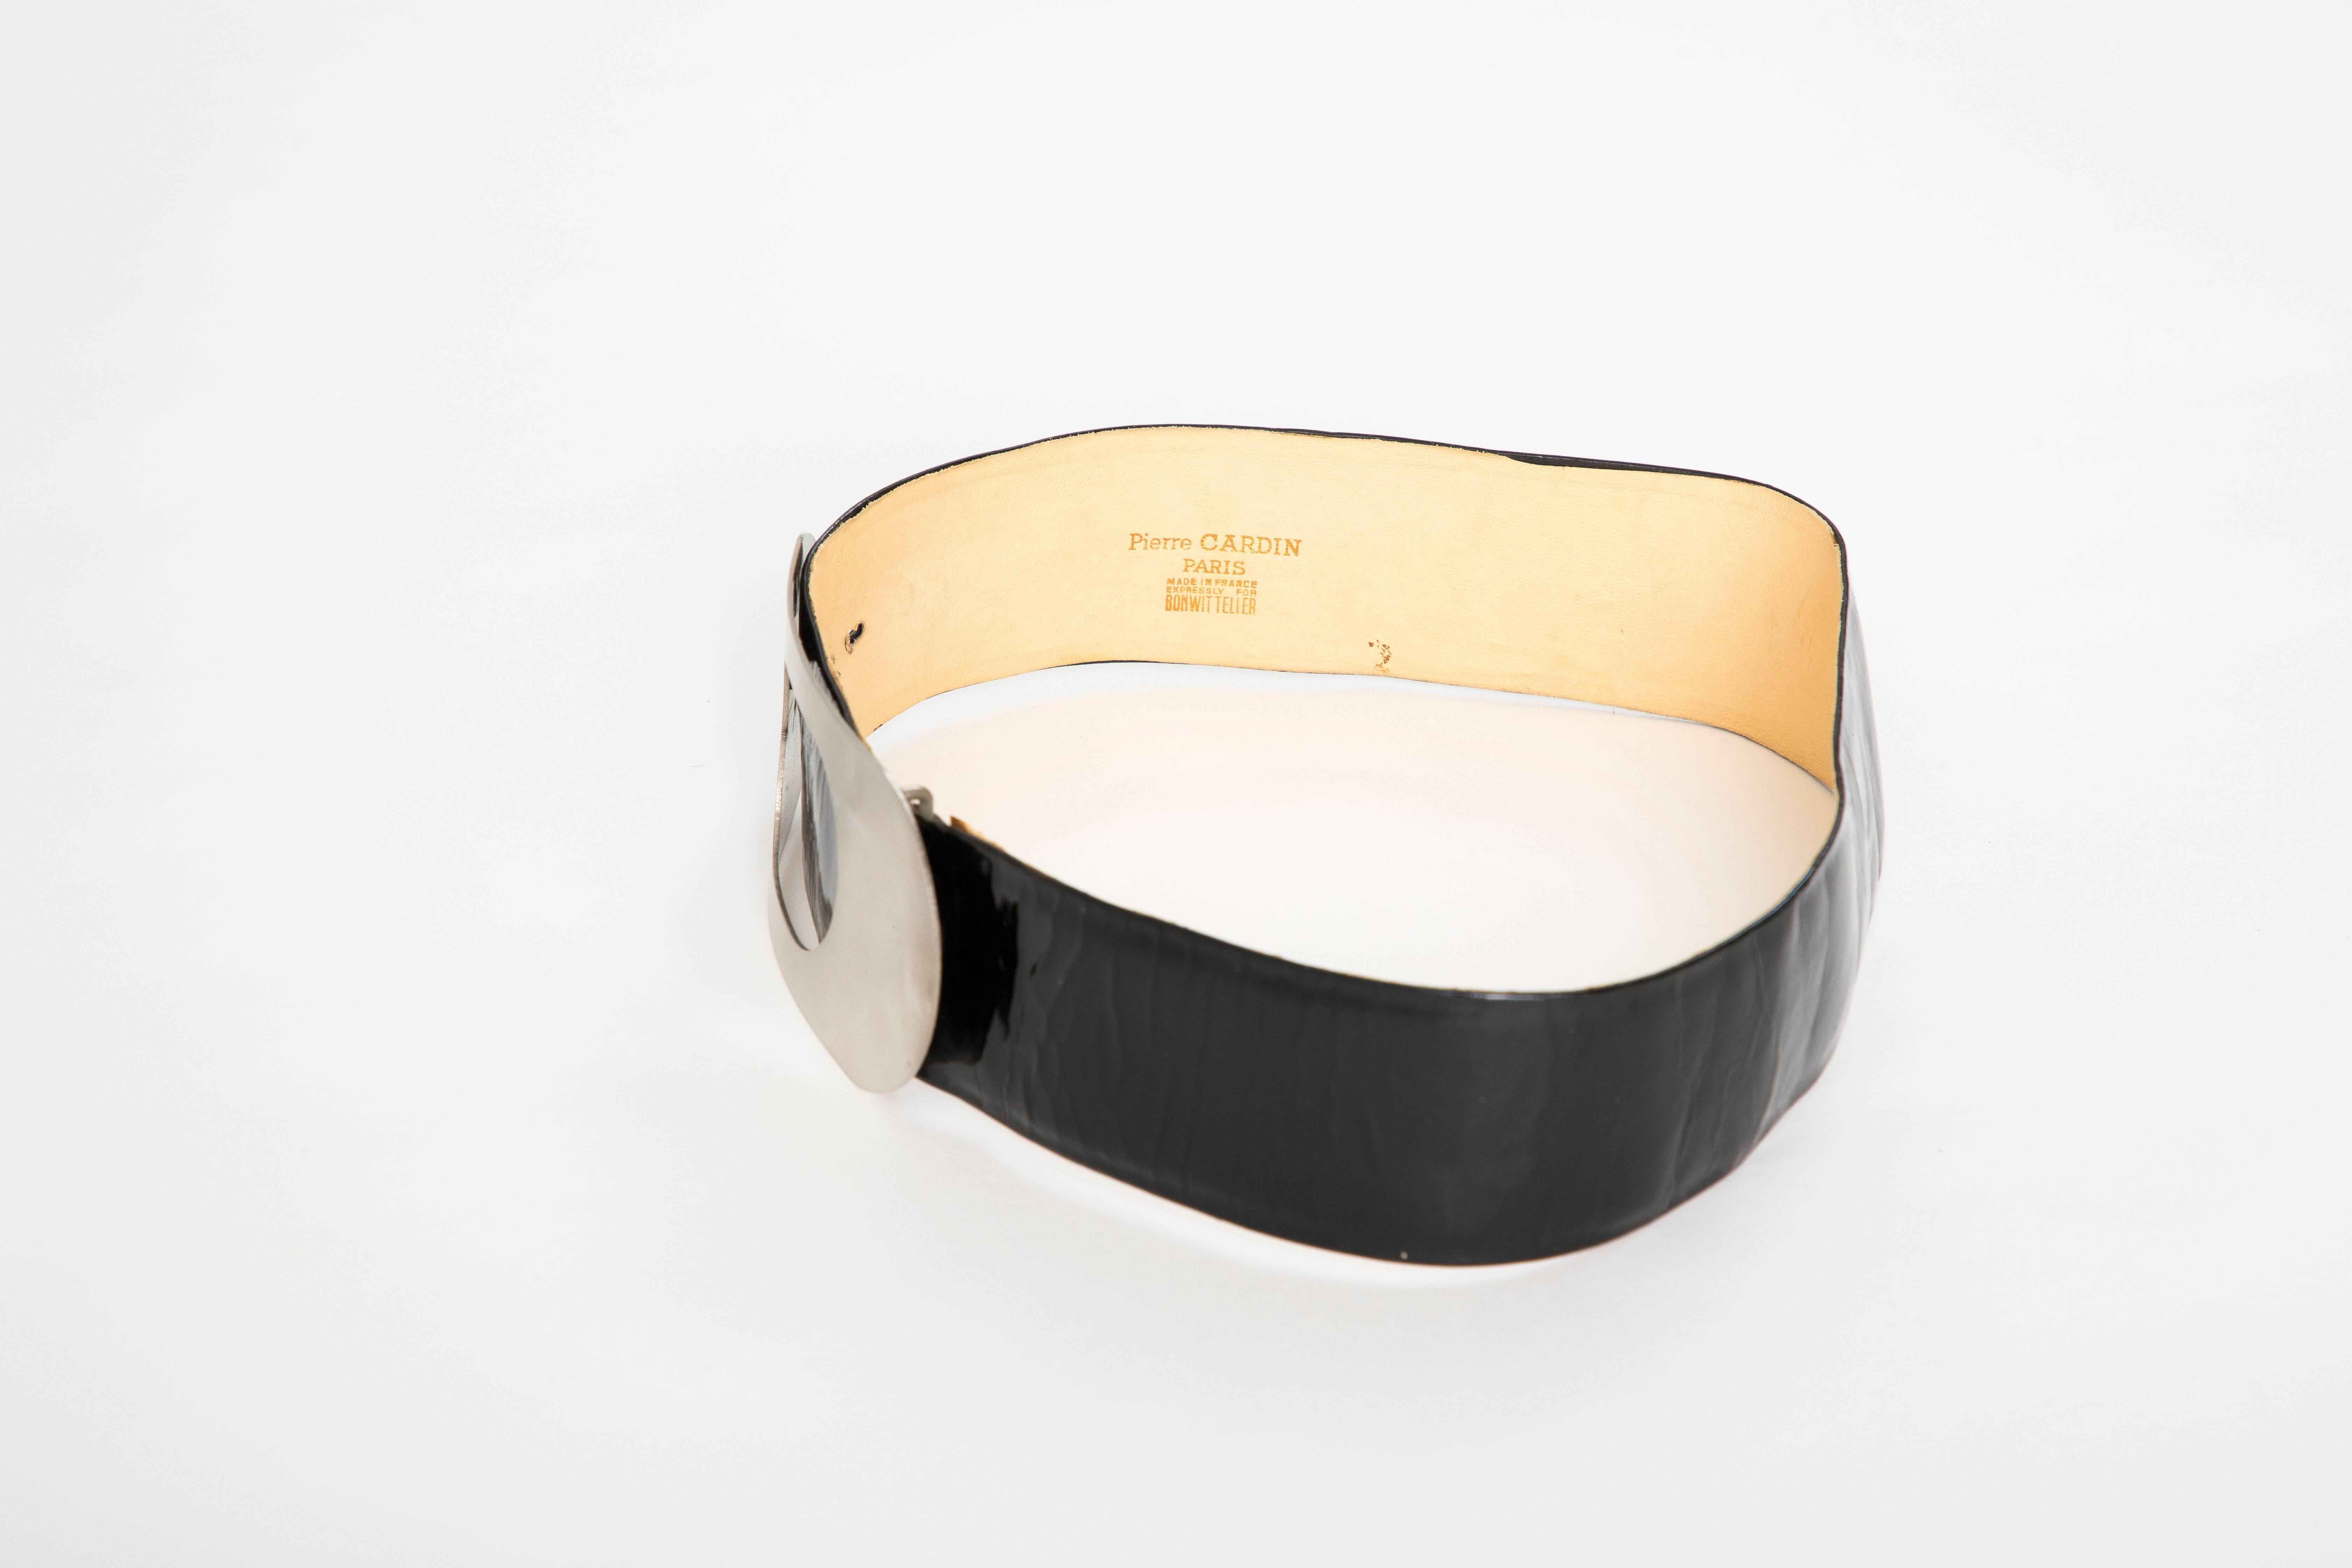 Orange Pierre Cardin Black Patent Leather Belt, Circa 1960's